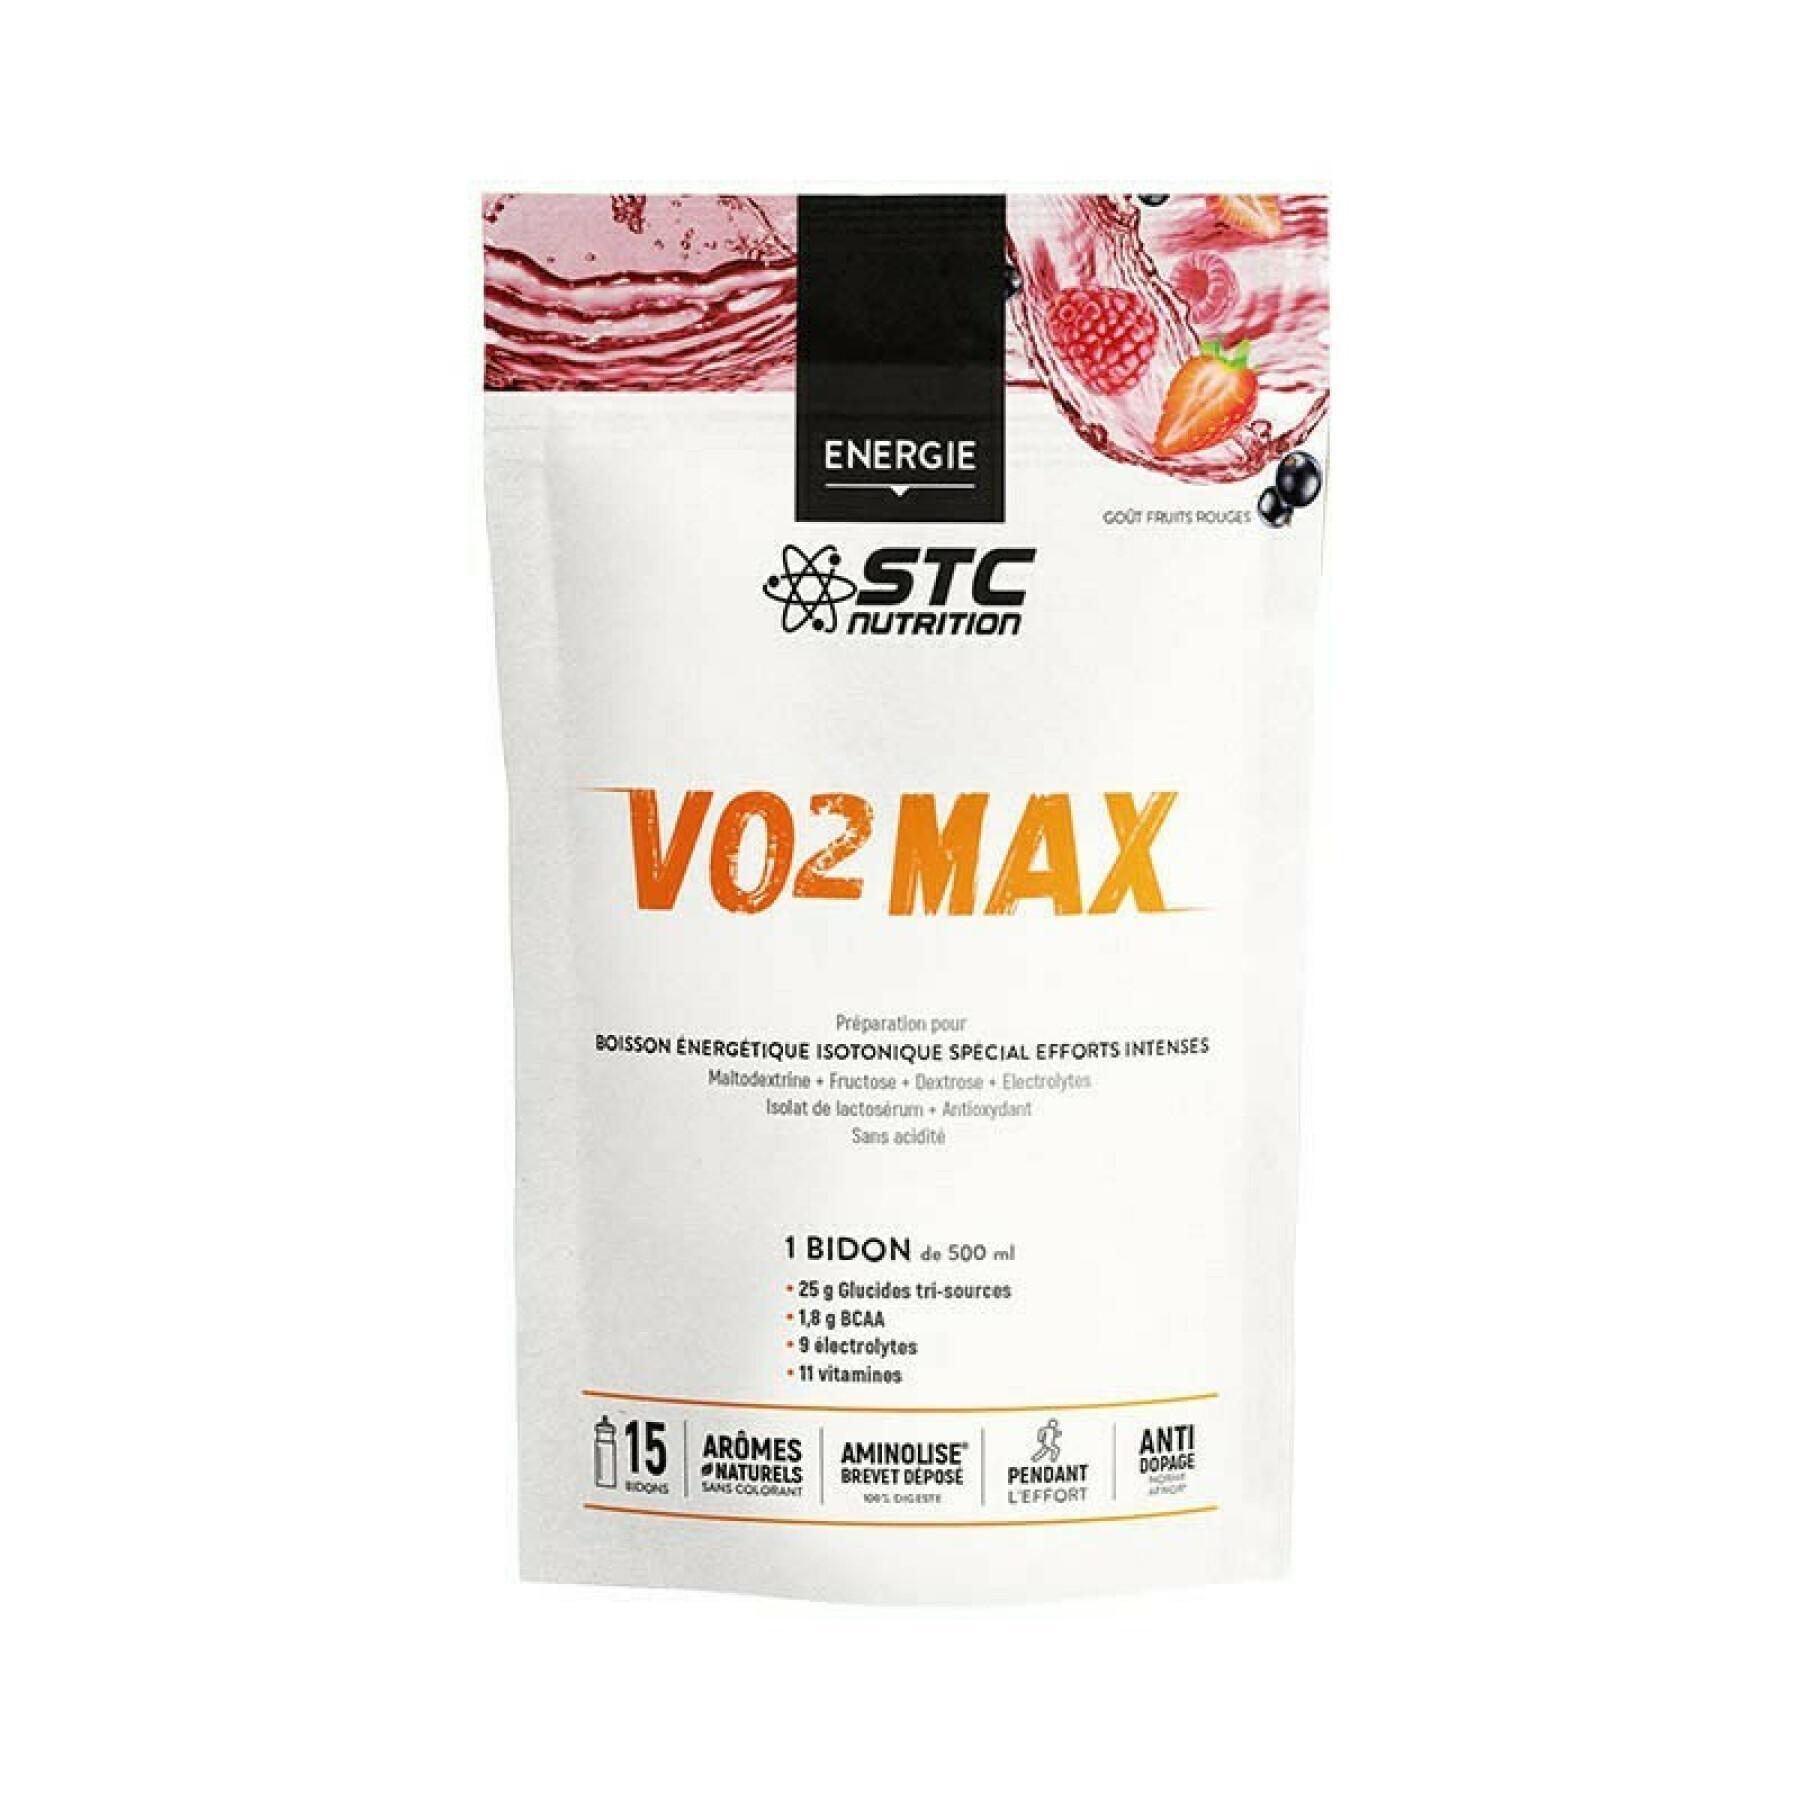 Doypack nutrition vo2 max® med mätsked STC Nutrition - fruits rouges - 525 g